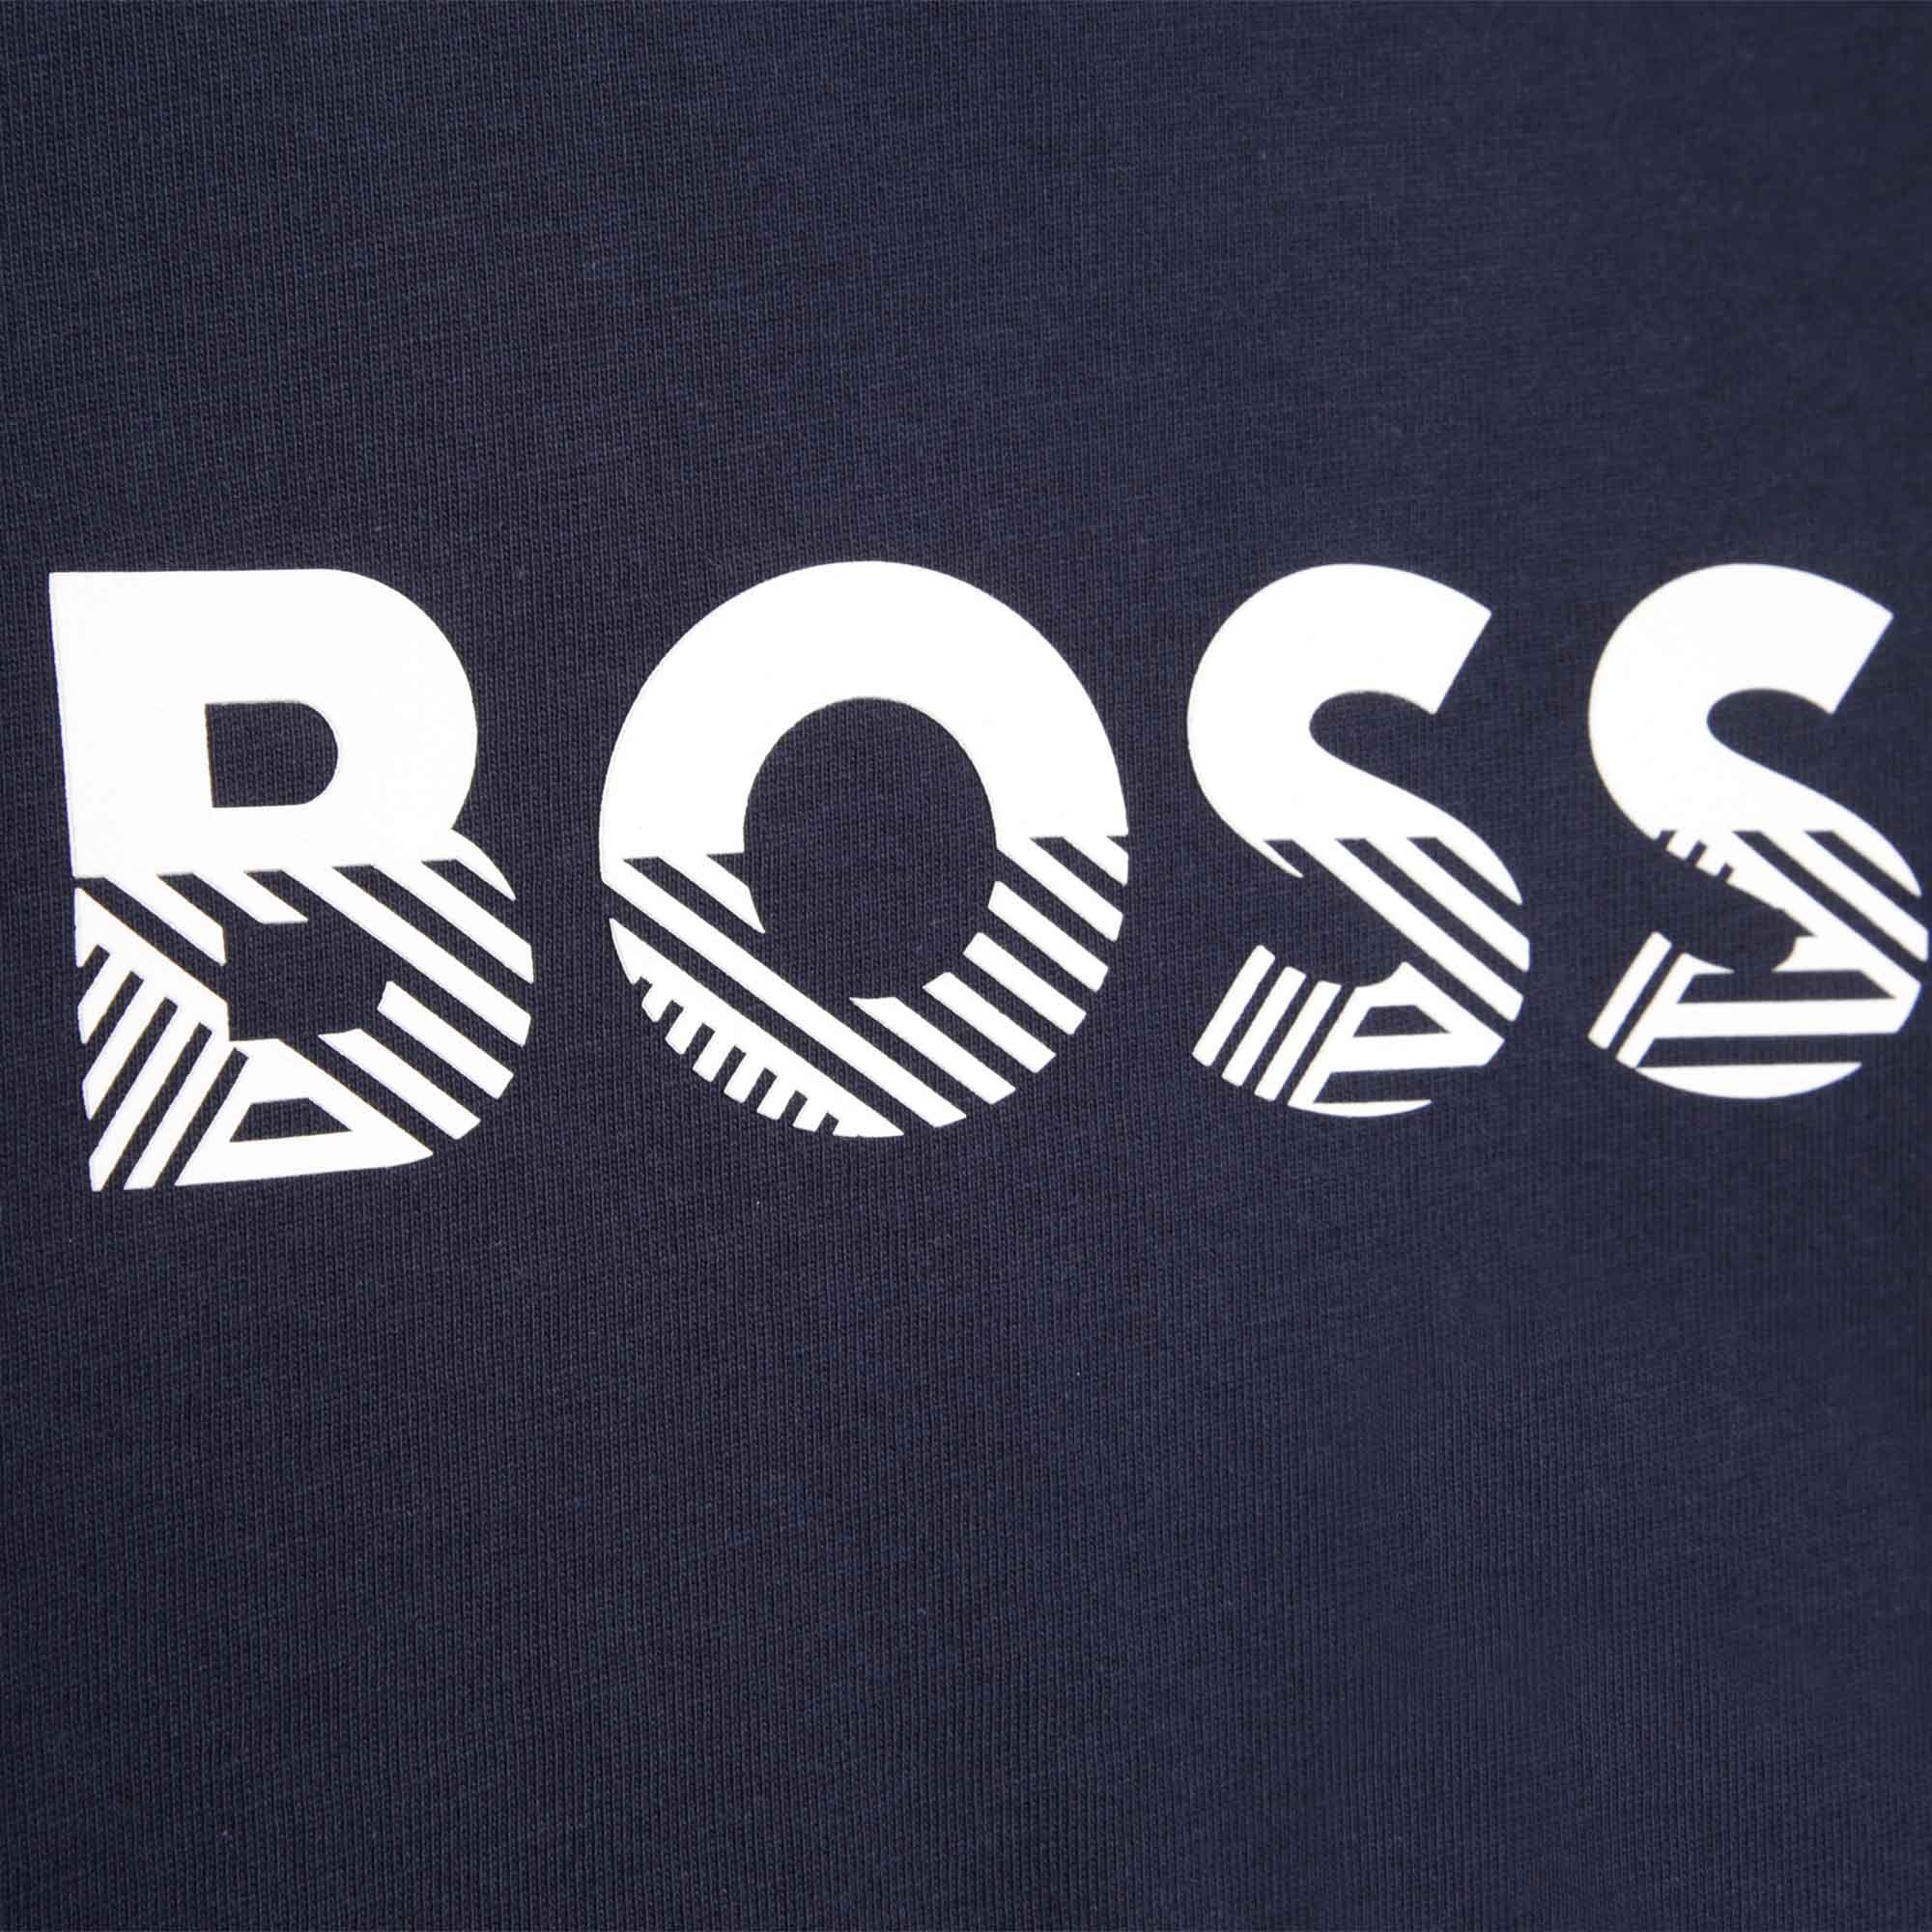 Hugo Boss Kids  Logo T Shirt Navy